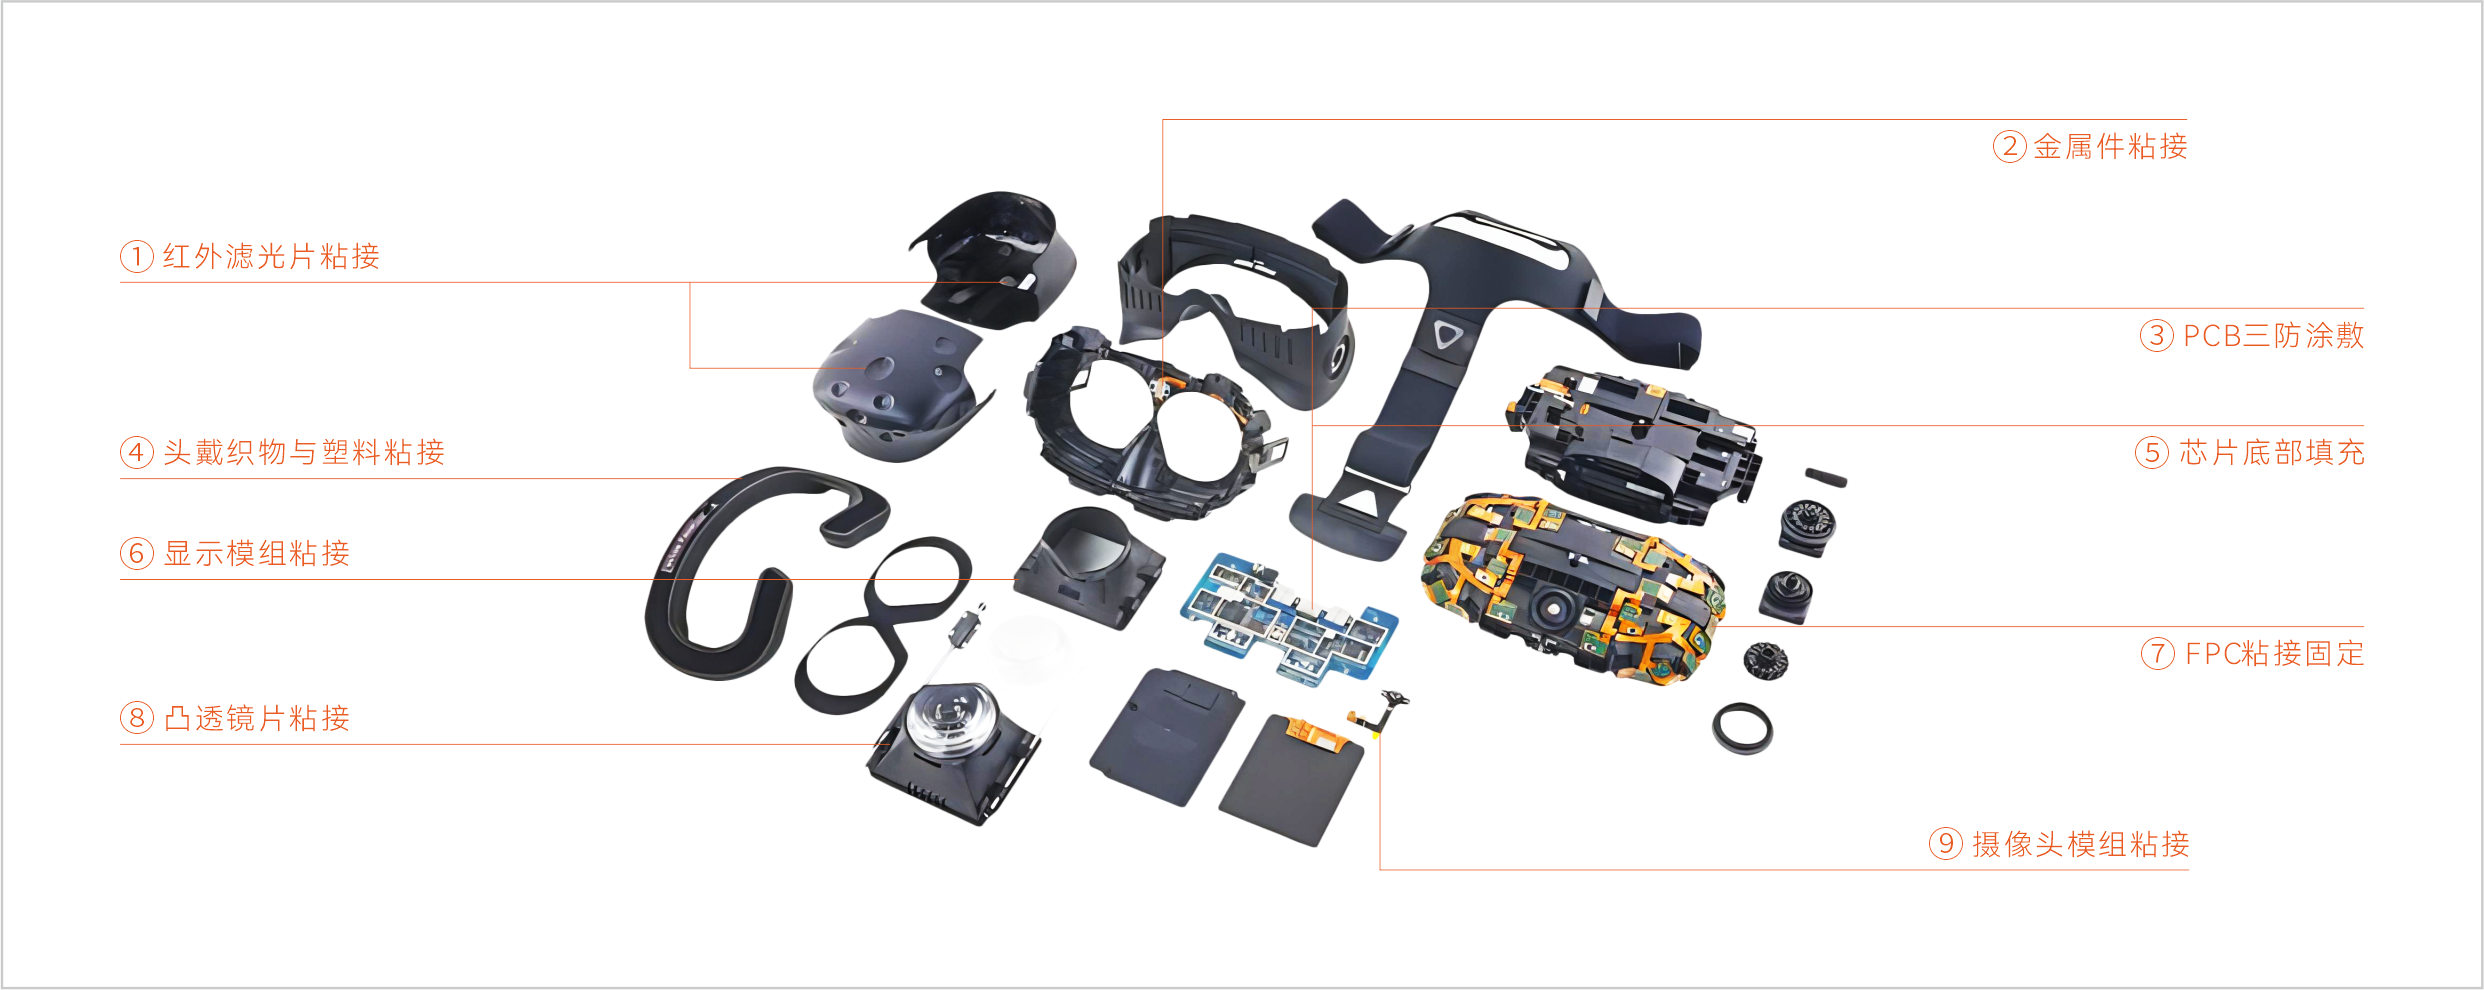 VR设备胶粘产品应用方案